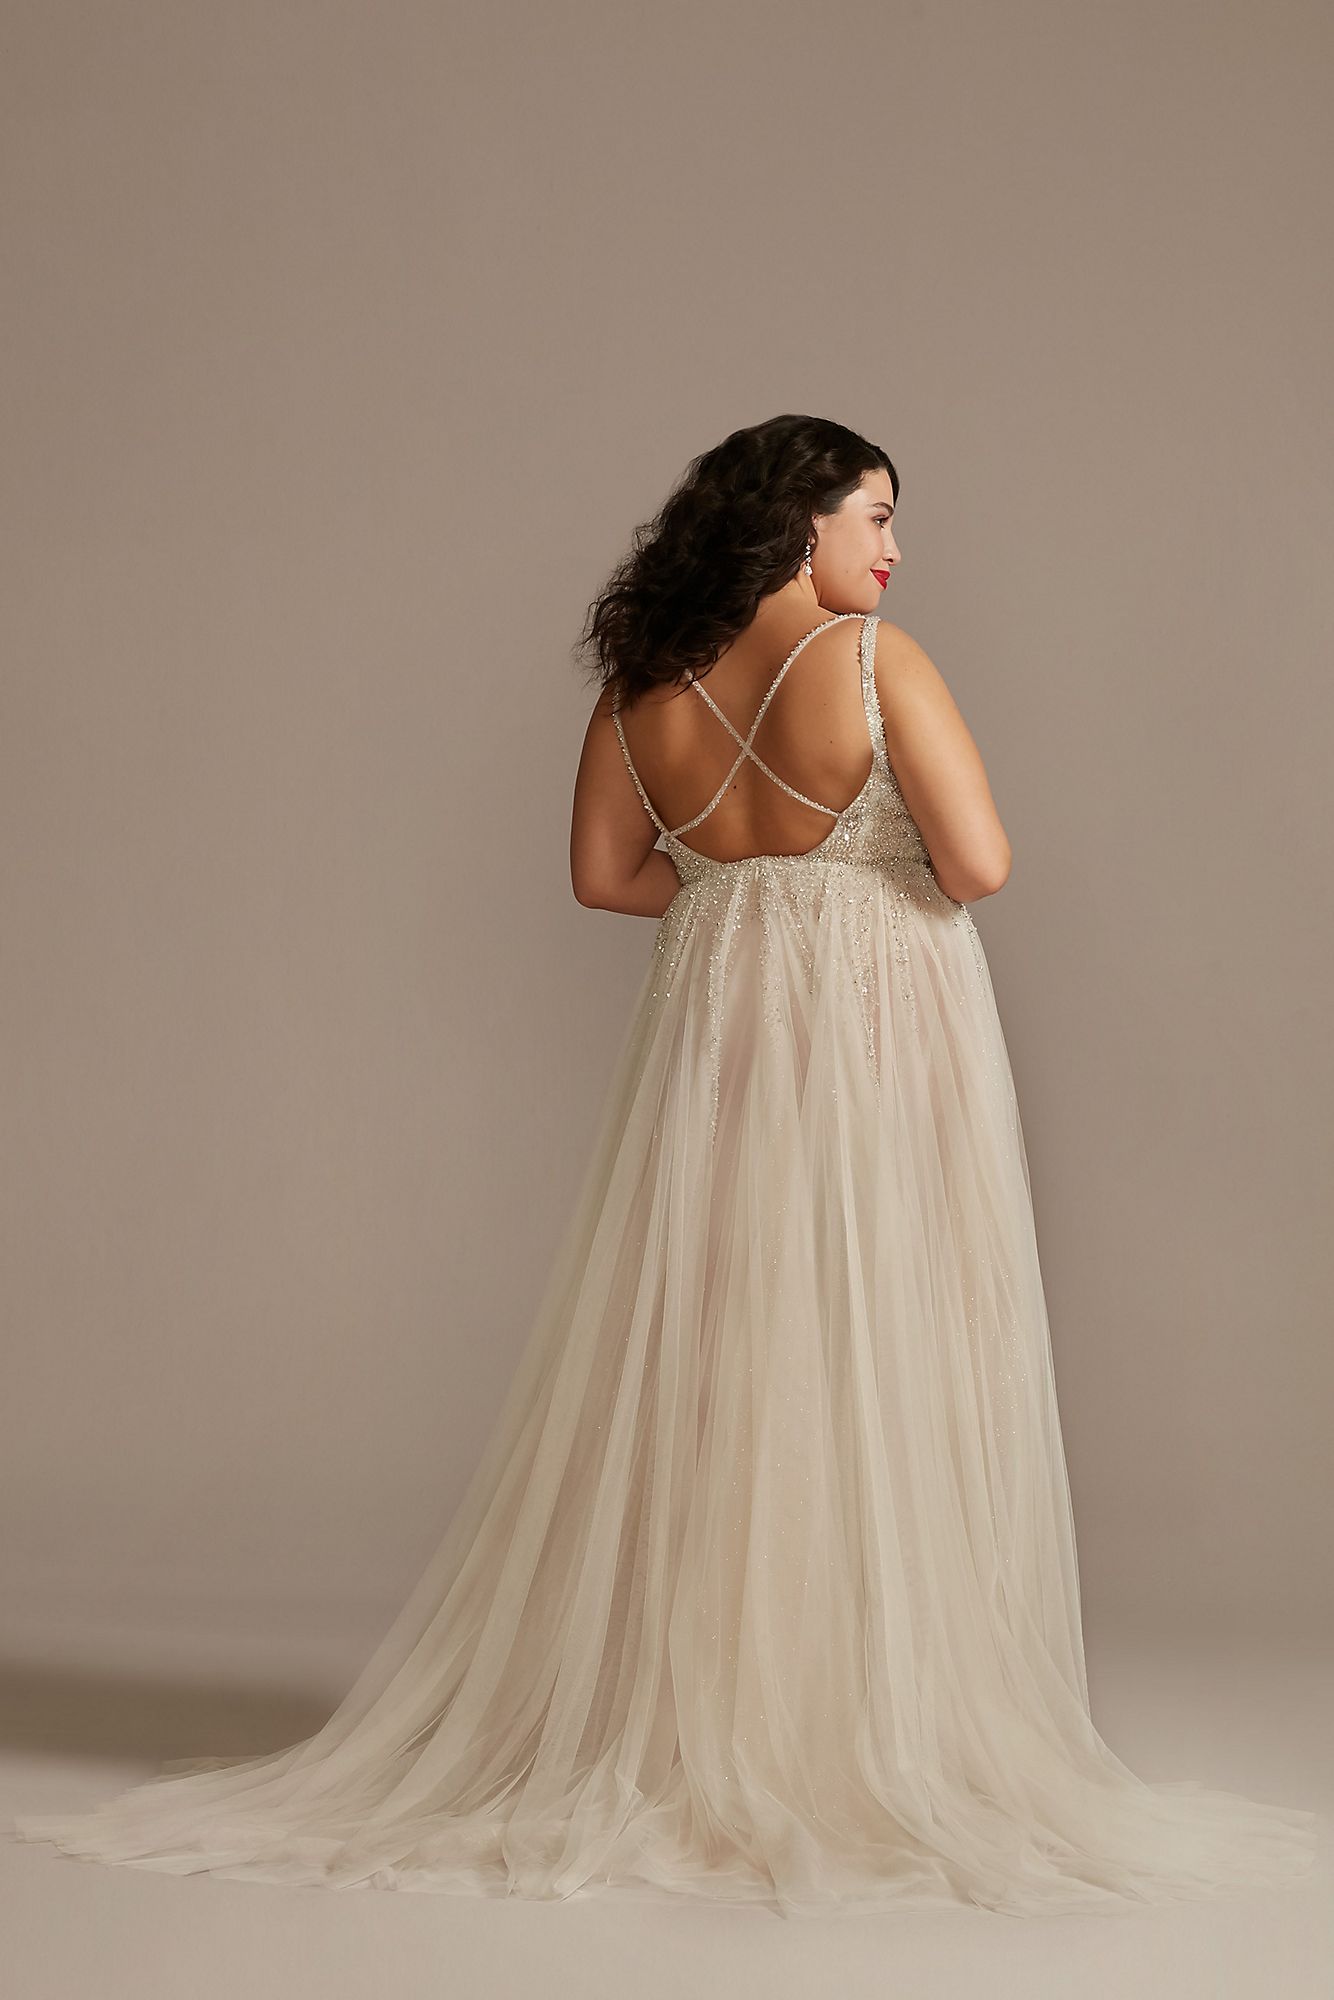 Beaded Illusion Plus Size Bodysuit Wedding Dress Galina Signature 9MBSWG837